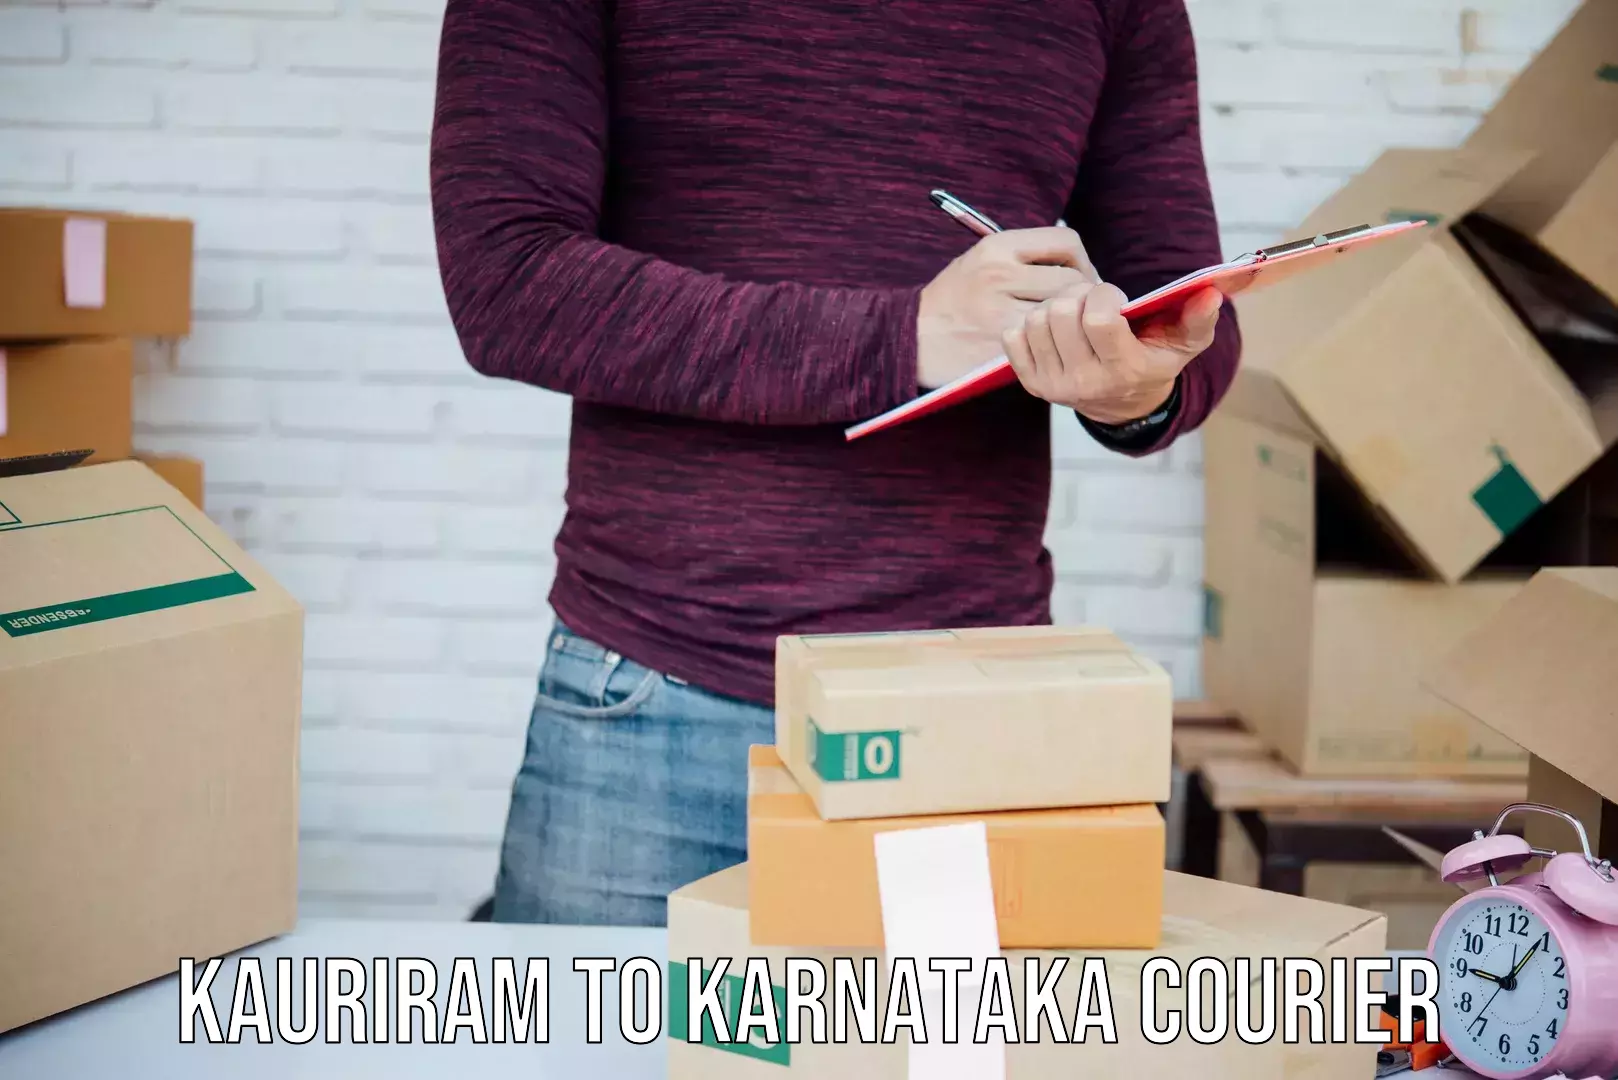 Express mail service Kauriram to Kittur